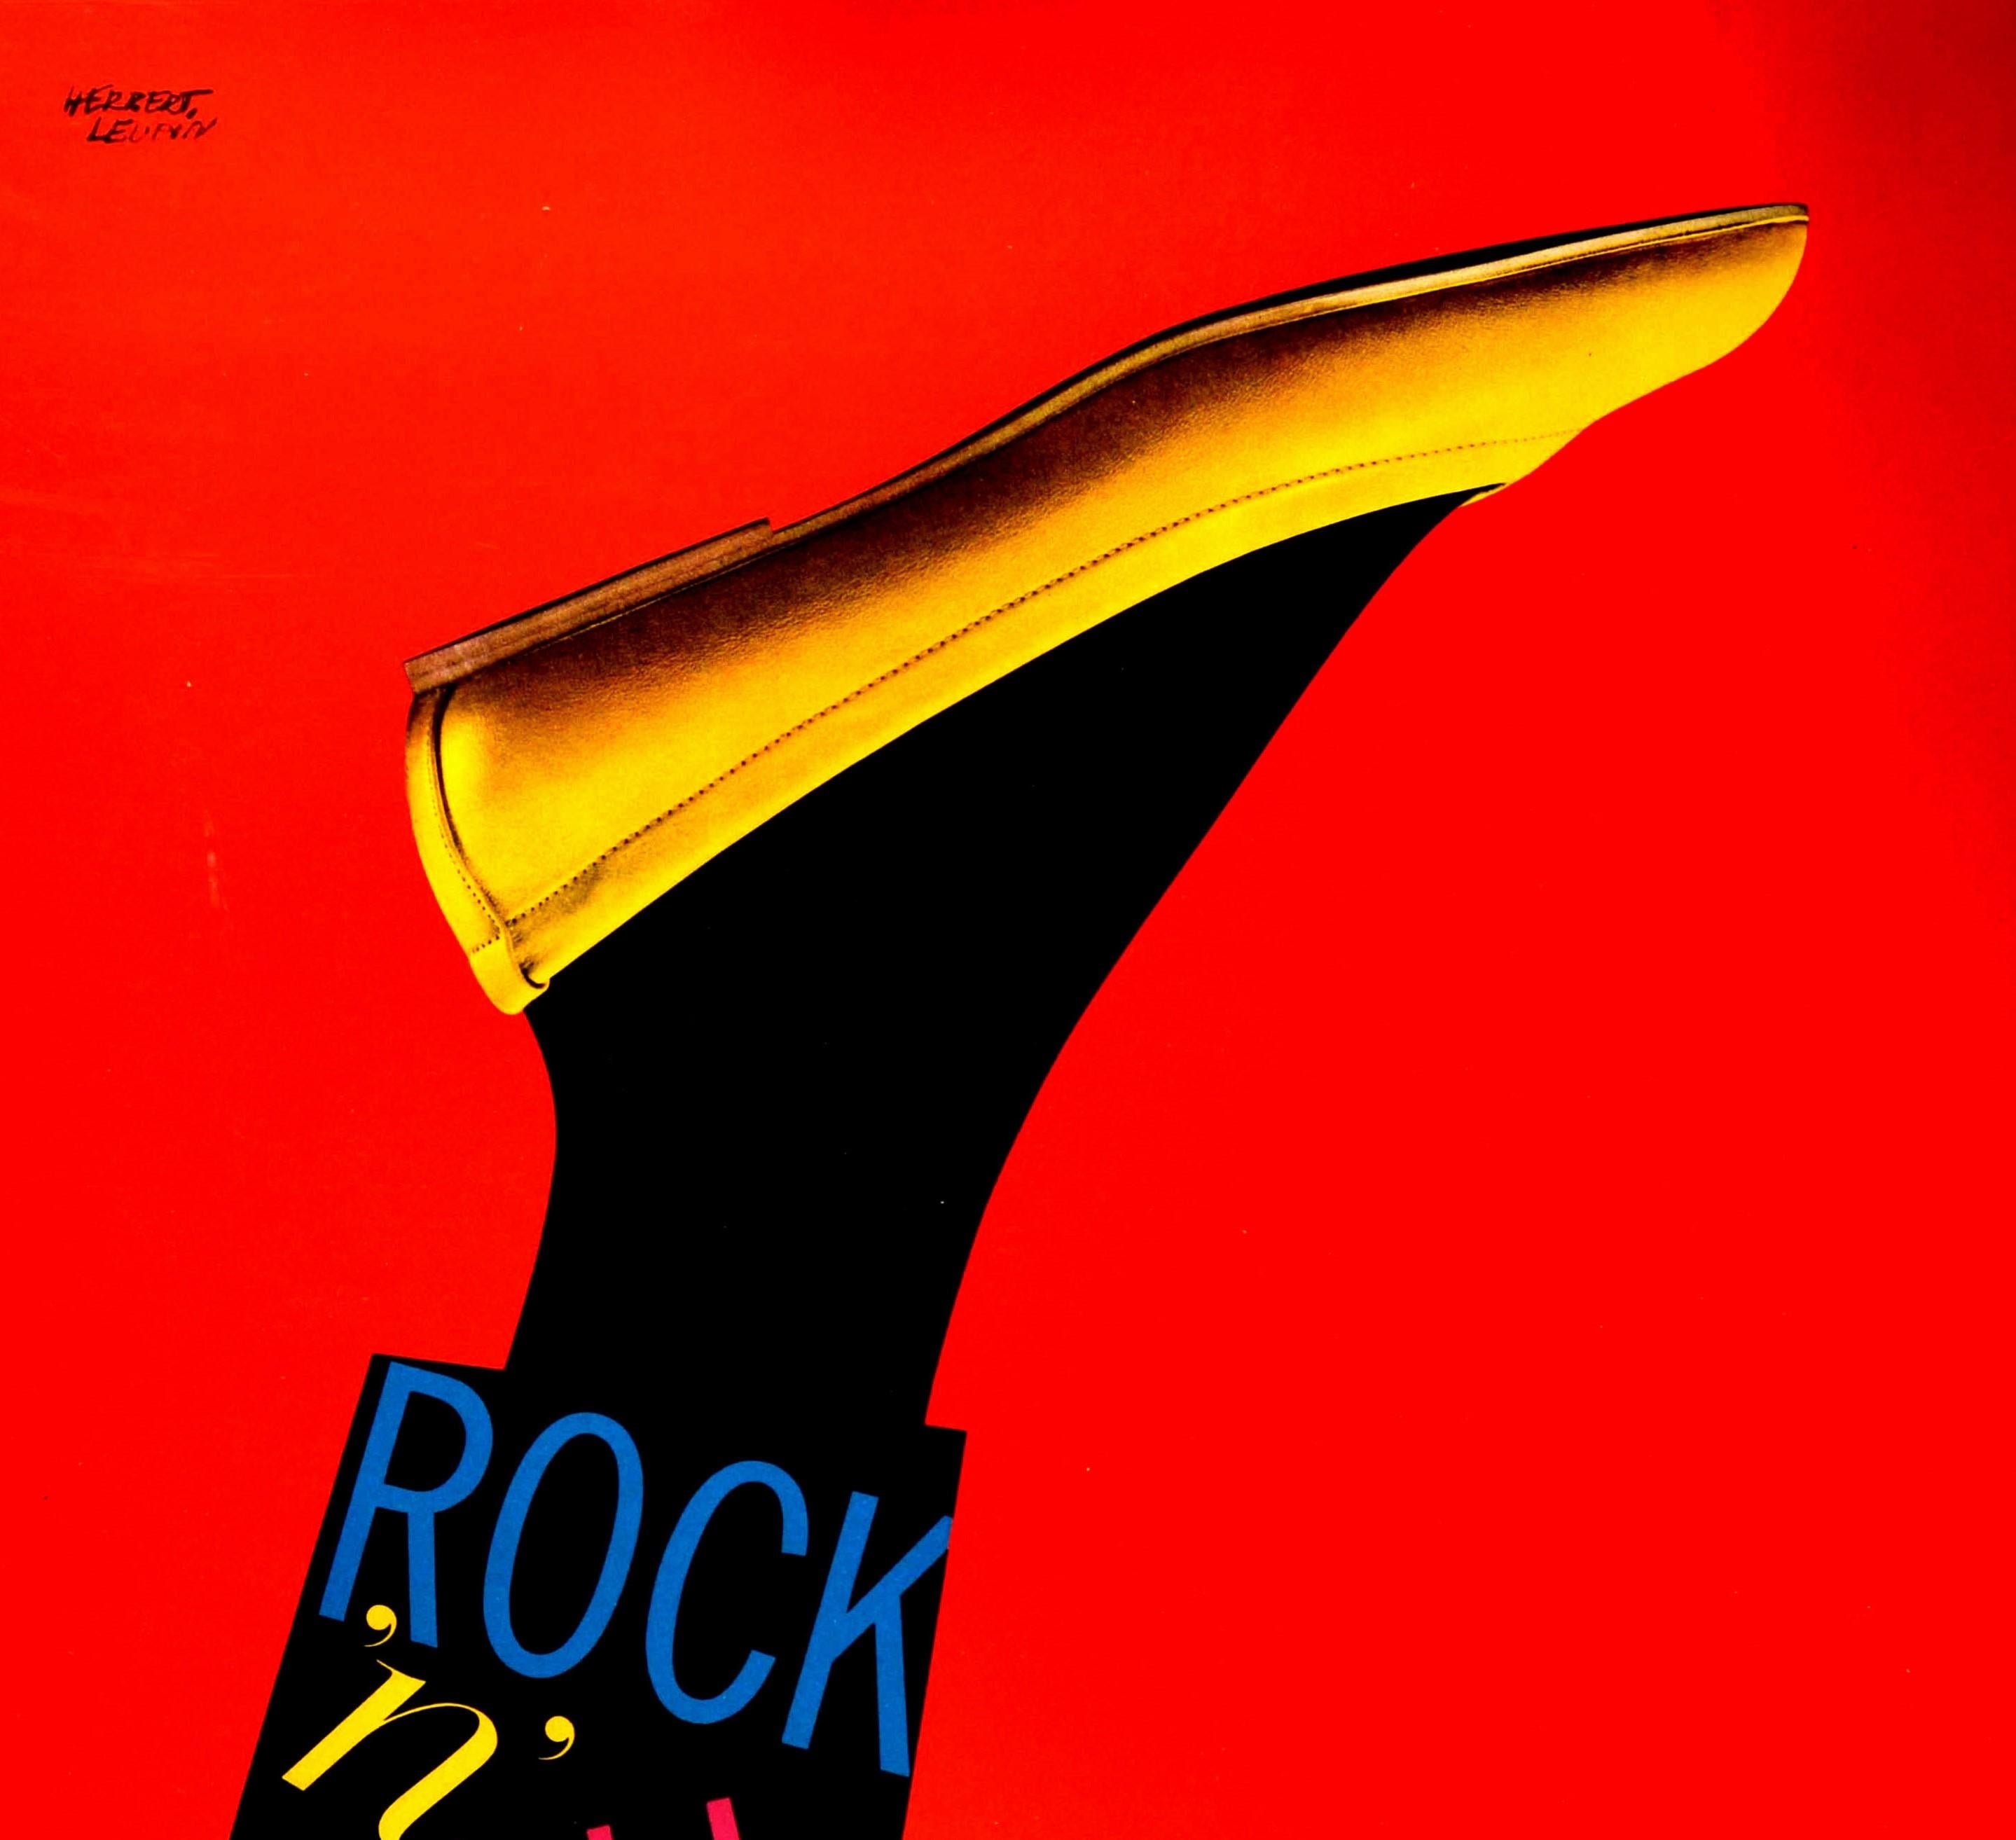 Original Vintage Poster Bata Shoes Swiss Made Rock N Roll Fashion Art Design - Print by Herbert Leupin